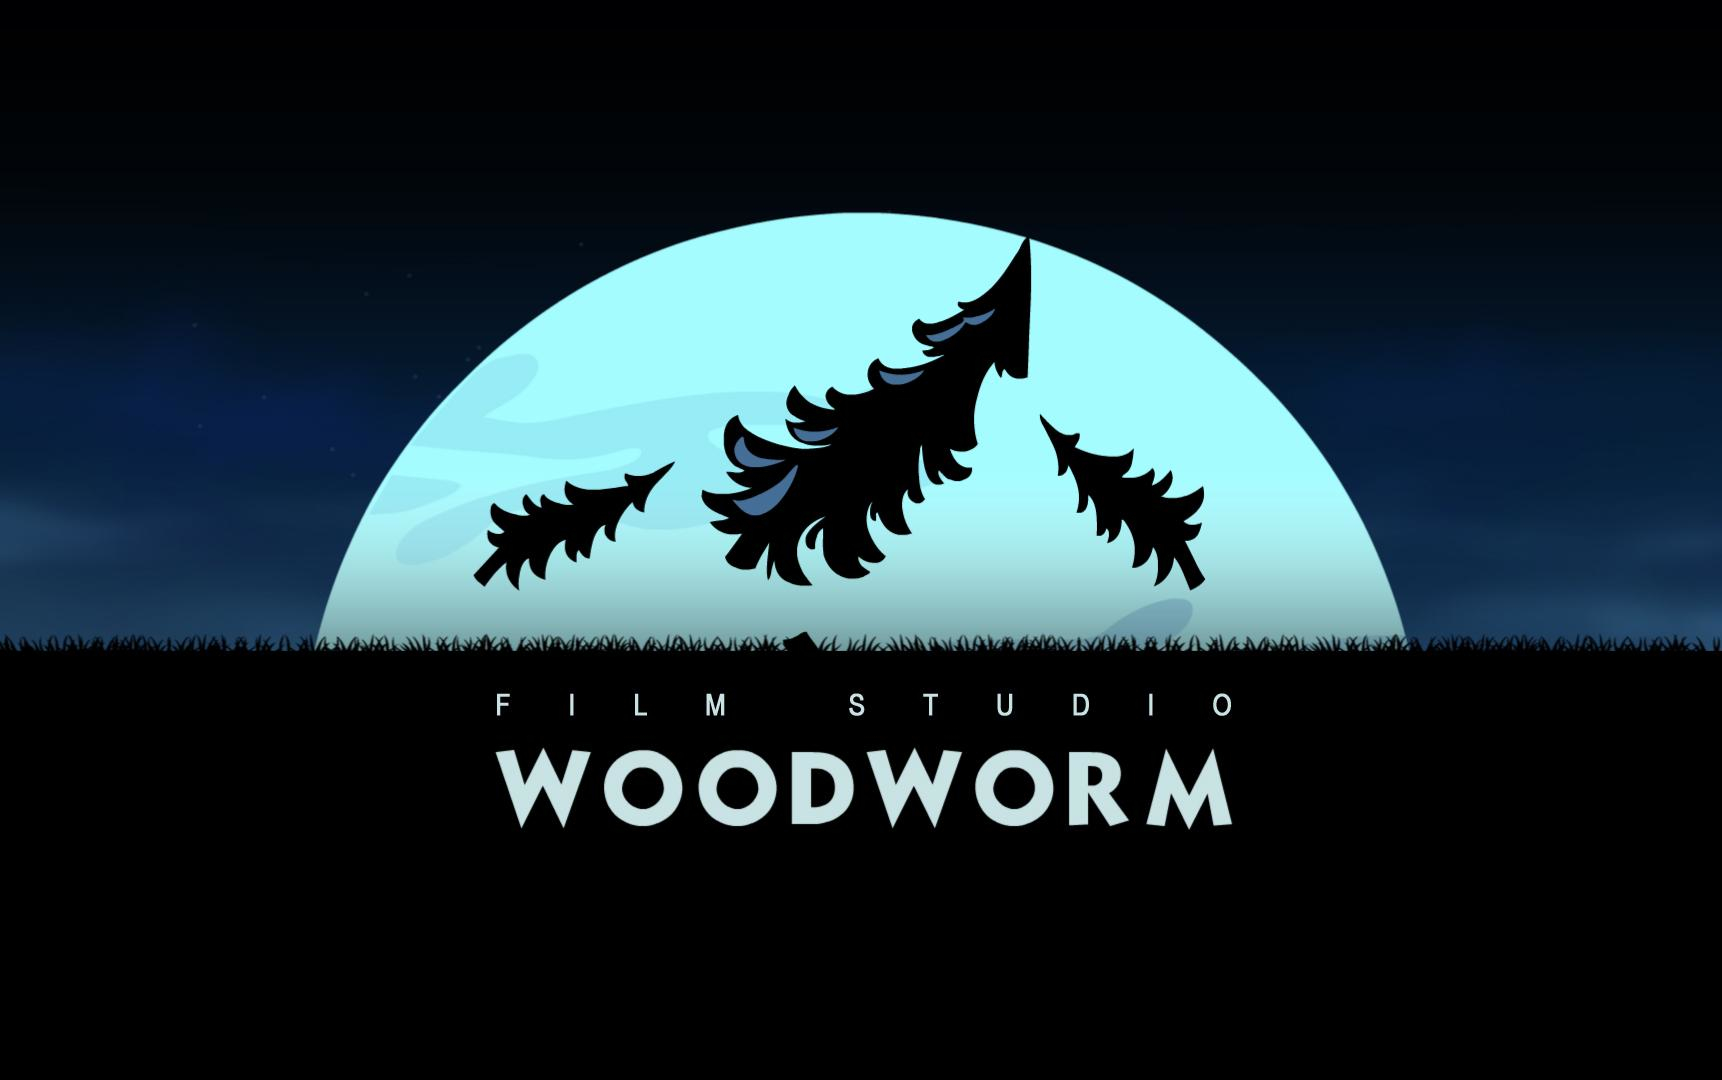 Woodworm Film Studio Ltd